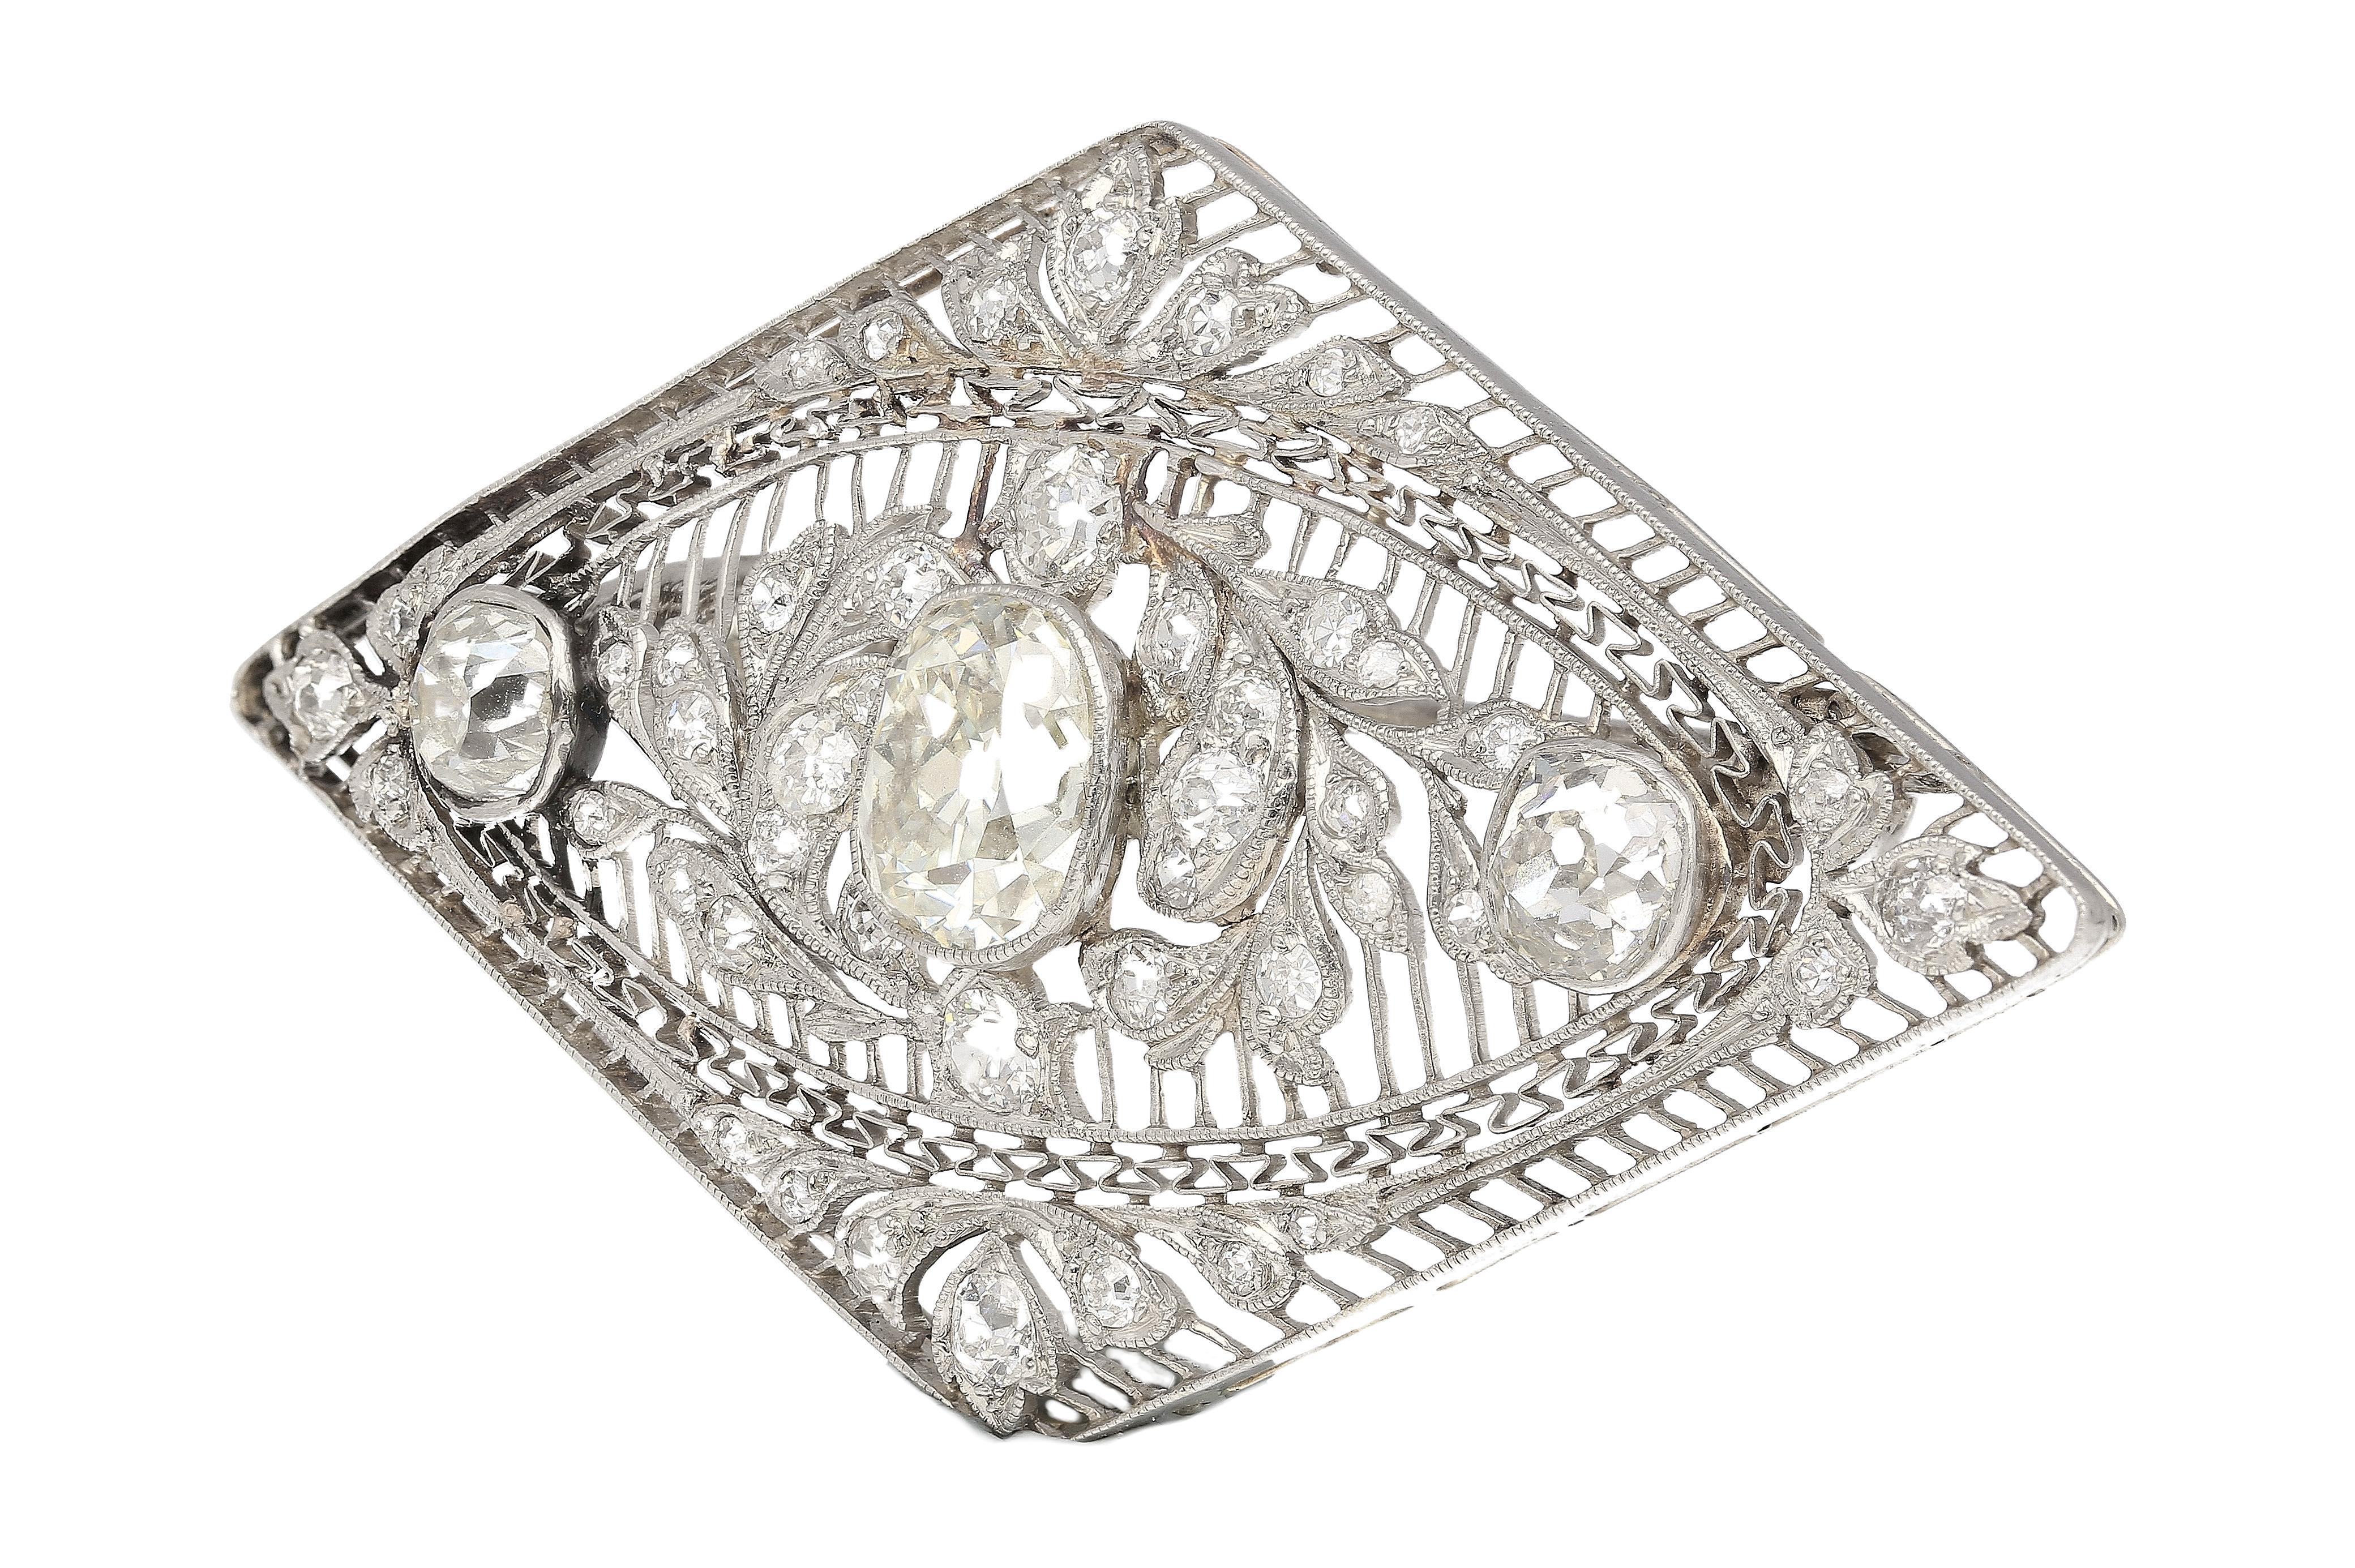 3.5 Carat Old European Cut Art Deco Diamond Brooch in Textured Filigree Platinum For Sale 2